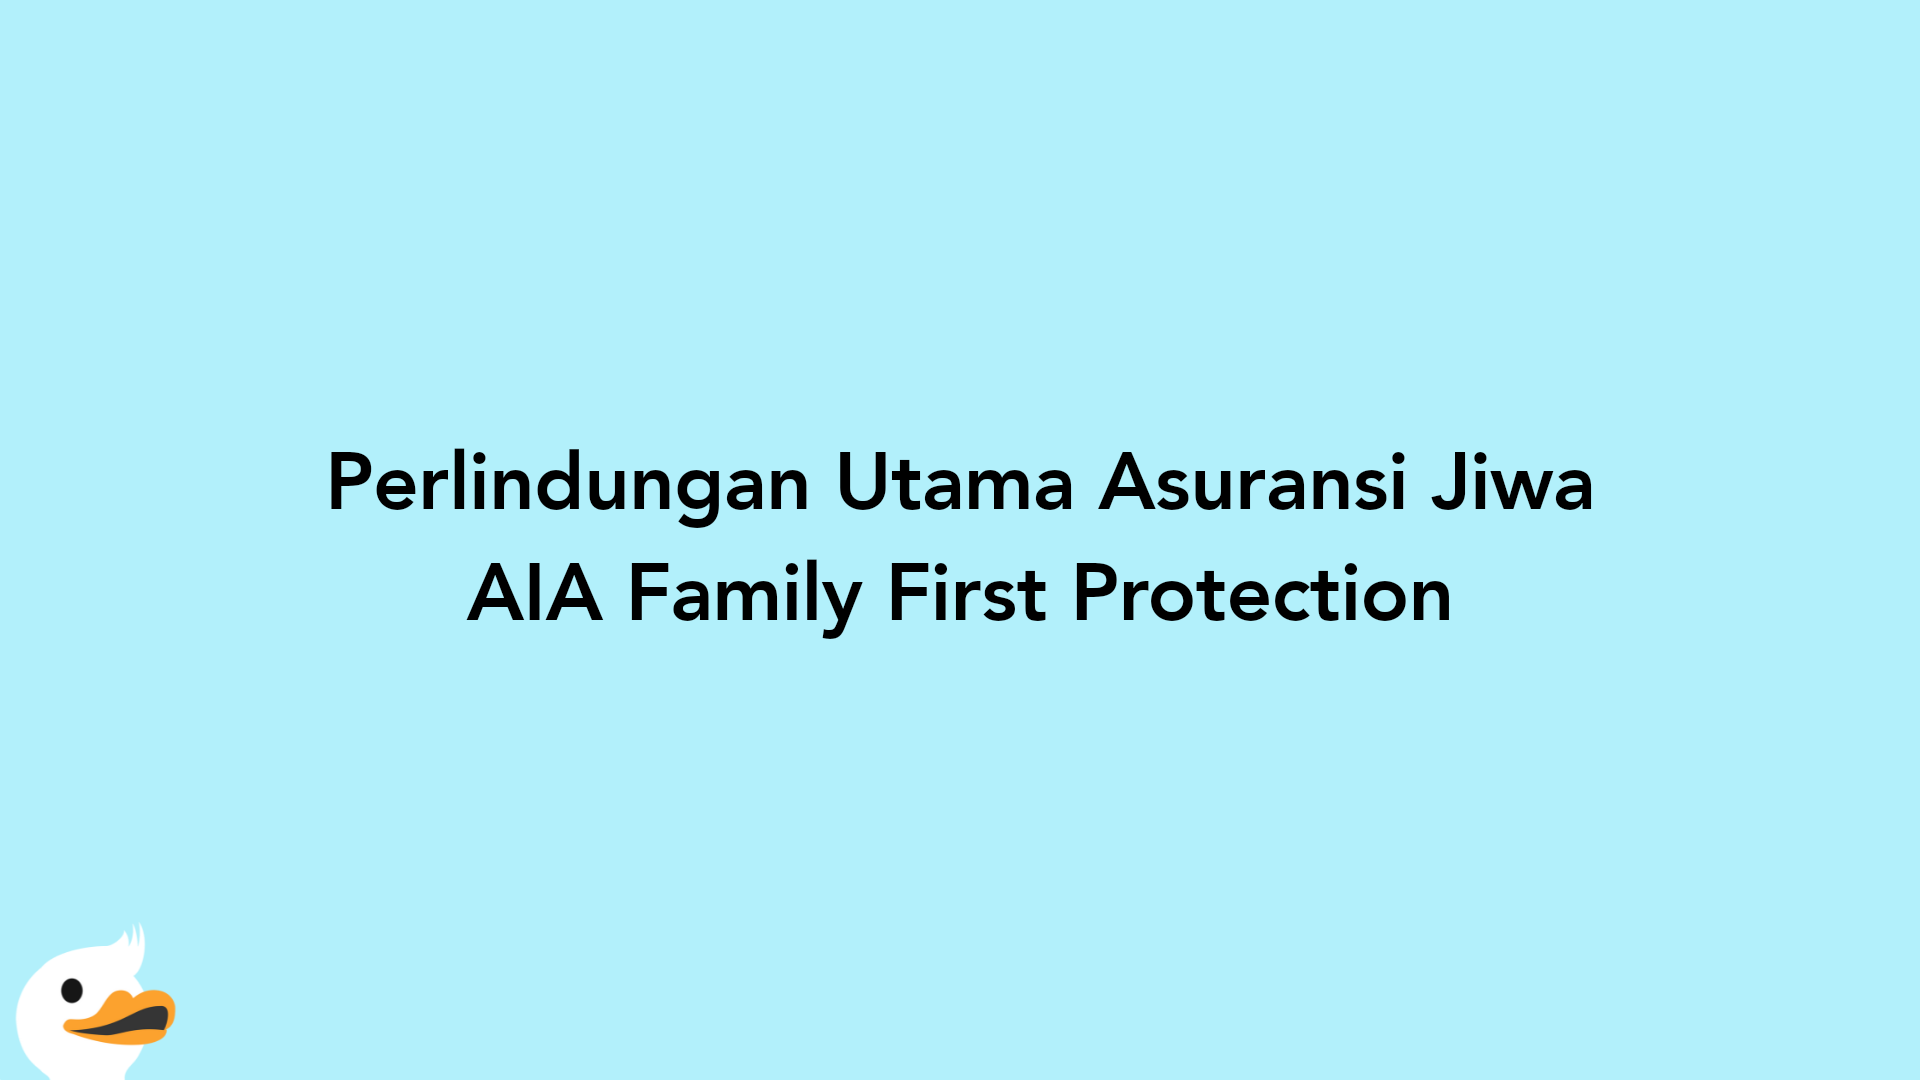 Perlindungan Utama Asuransi Jiwa AIA Family First Protection